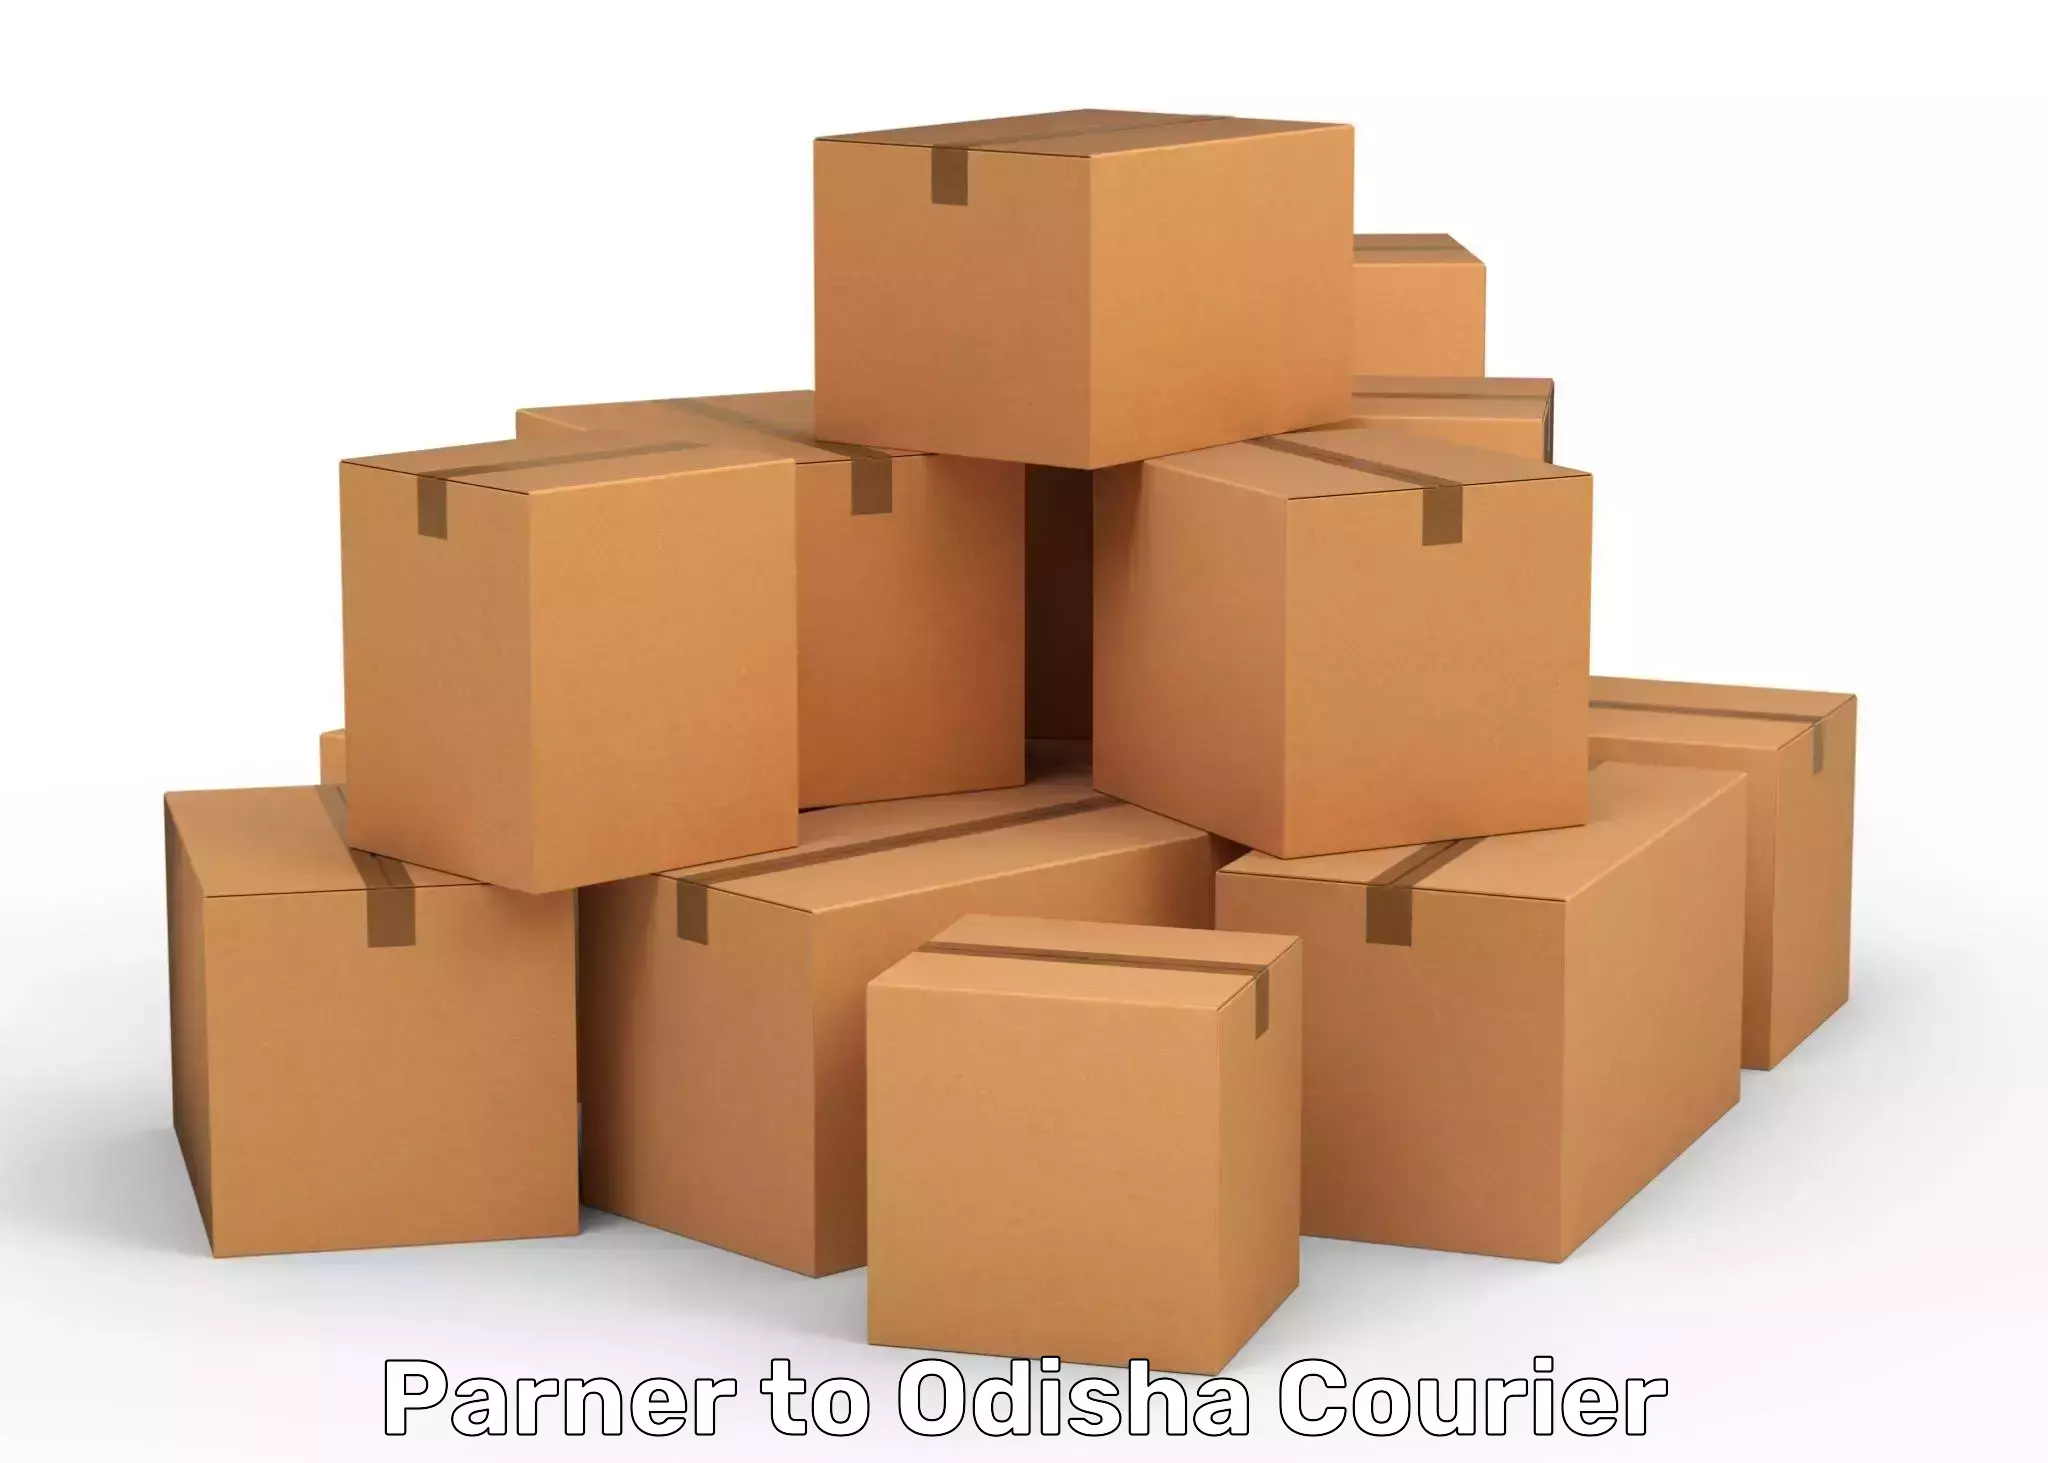 Courier service comparison in Parner to Garjanpur